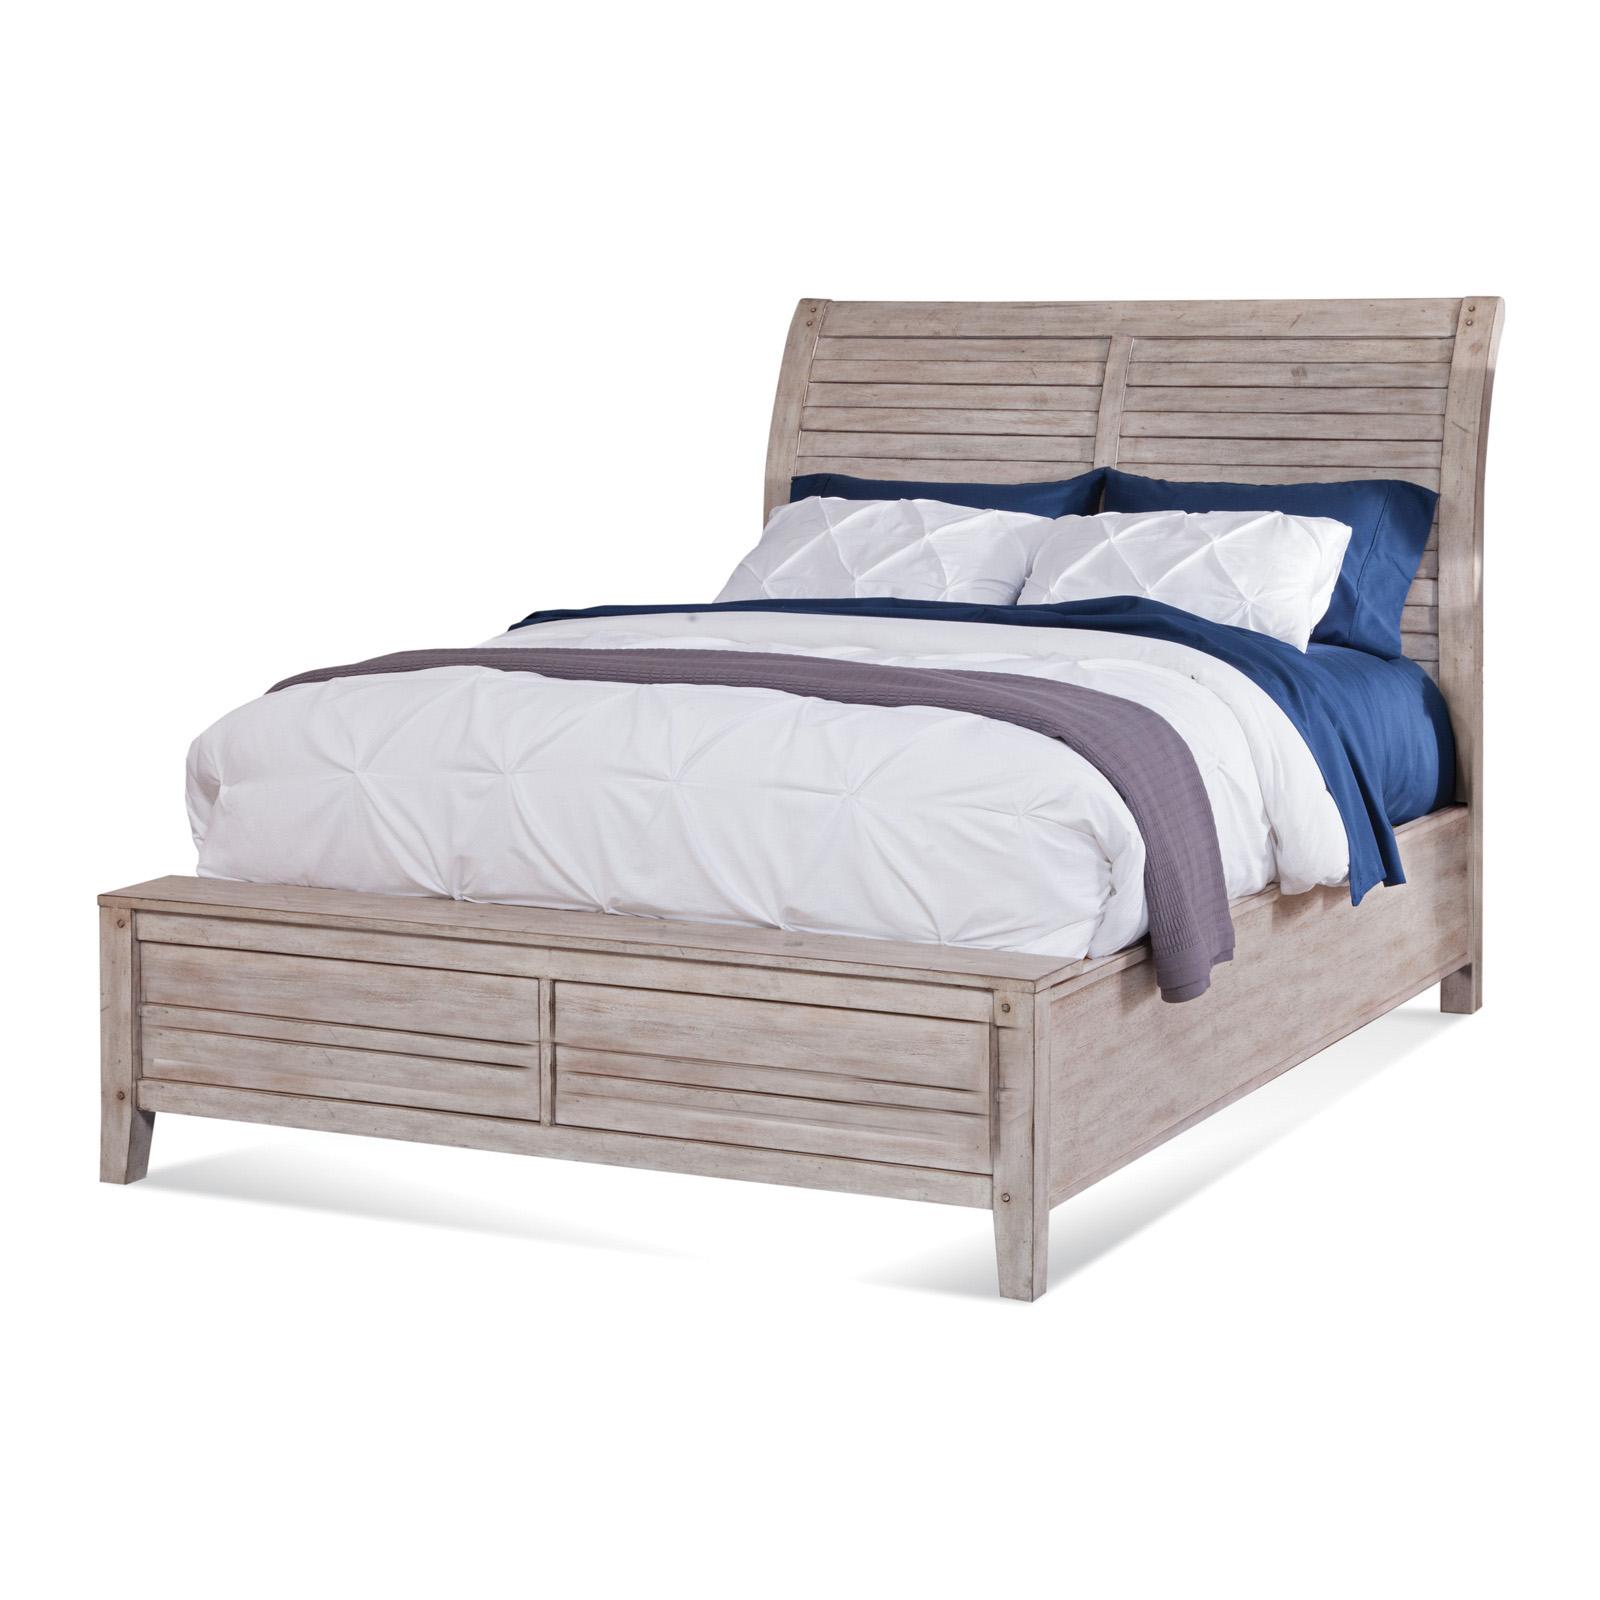 Classic, Traditional Sleigh Bed AURORA 2810-50SLP 2810-50SLPN in whitewash 